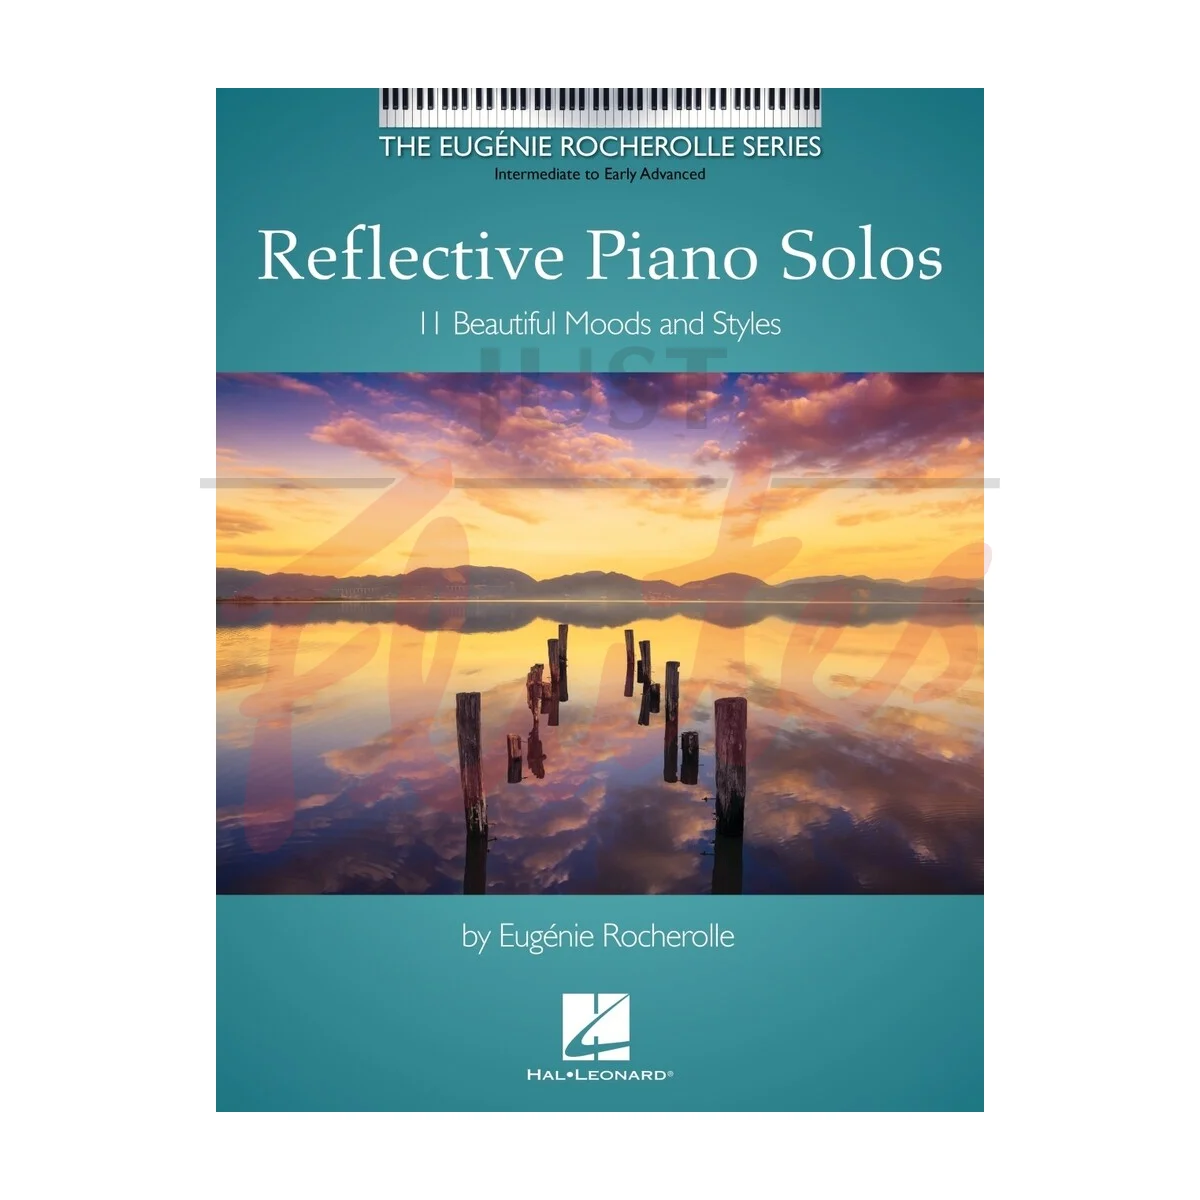 Reflective Piano Solos